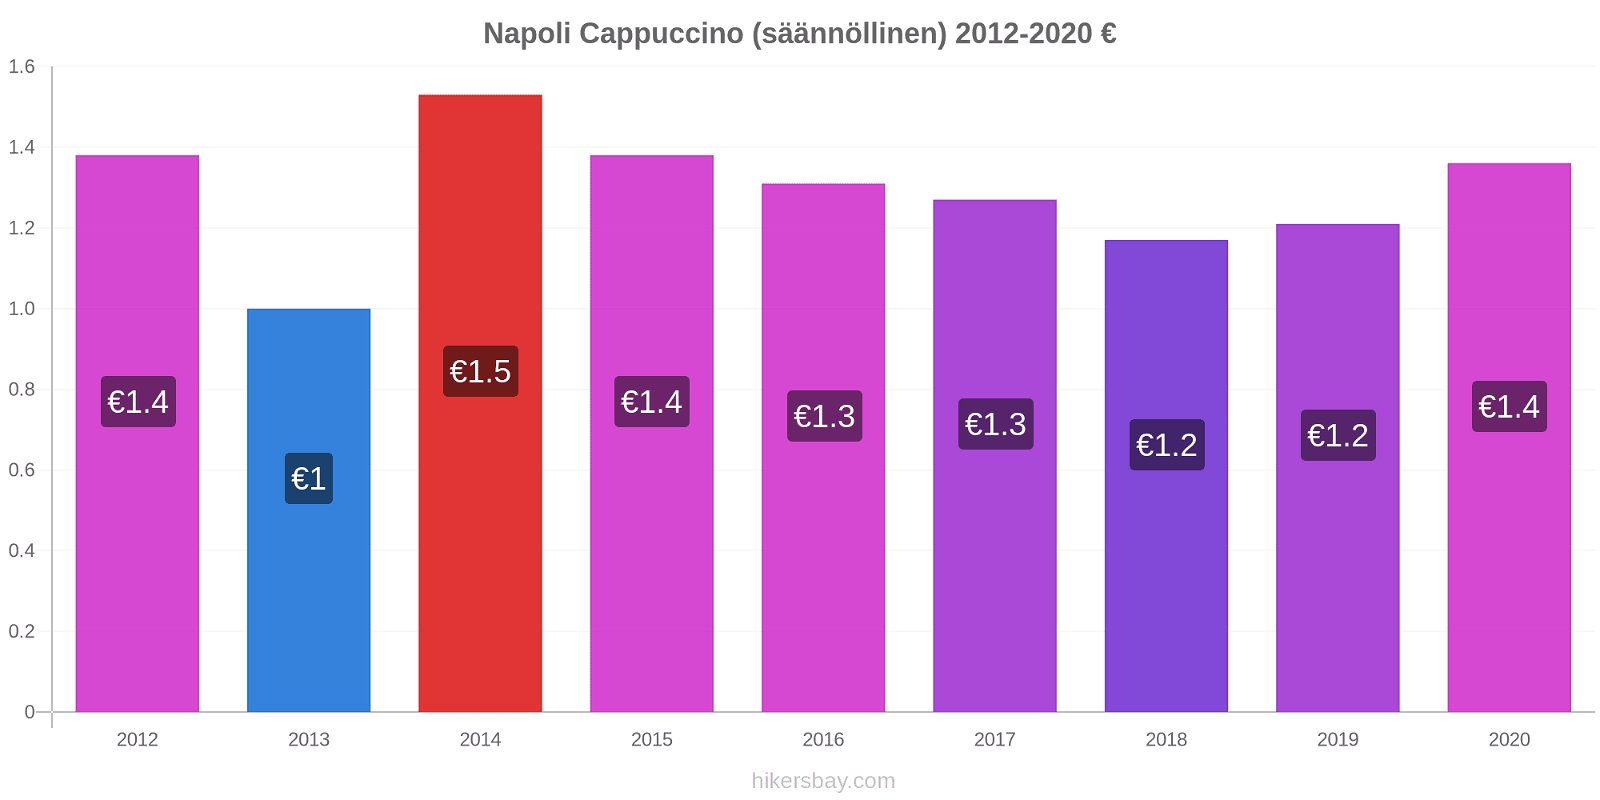 Napoli hintojen muutokset Cappuccino (säännöllinen) hikersbay.com